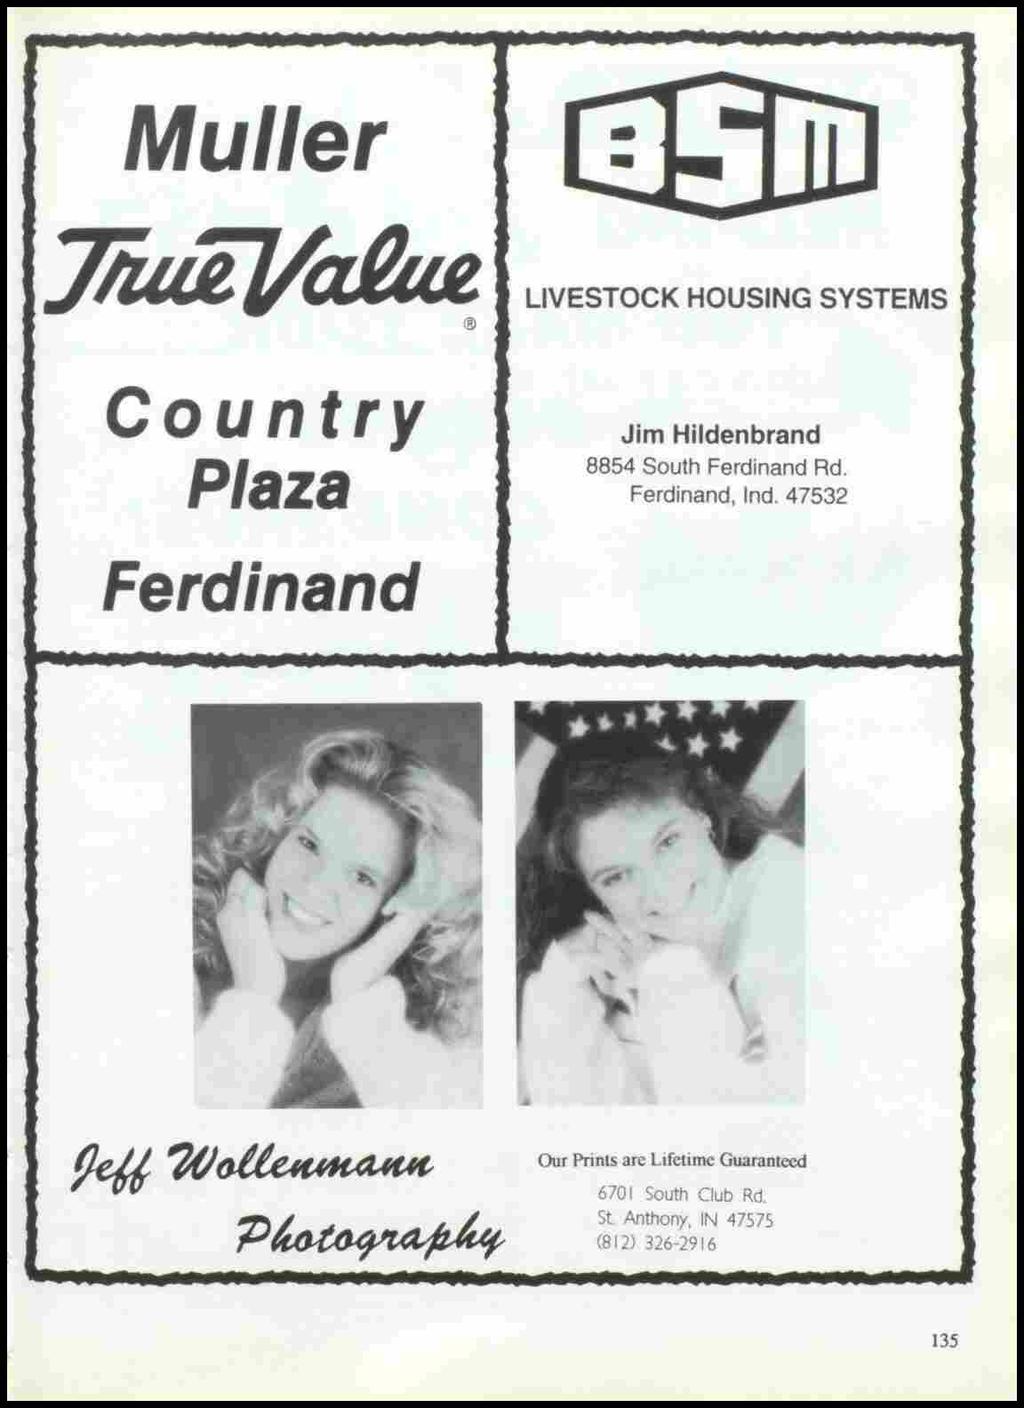 Muller ~Va&«Country Plaza LIVESTOCK HOUSING SYSTEMS Jim Hildenbrand 8854 South Ferdinand Rd. Ferdinand, Ind.